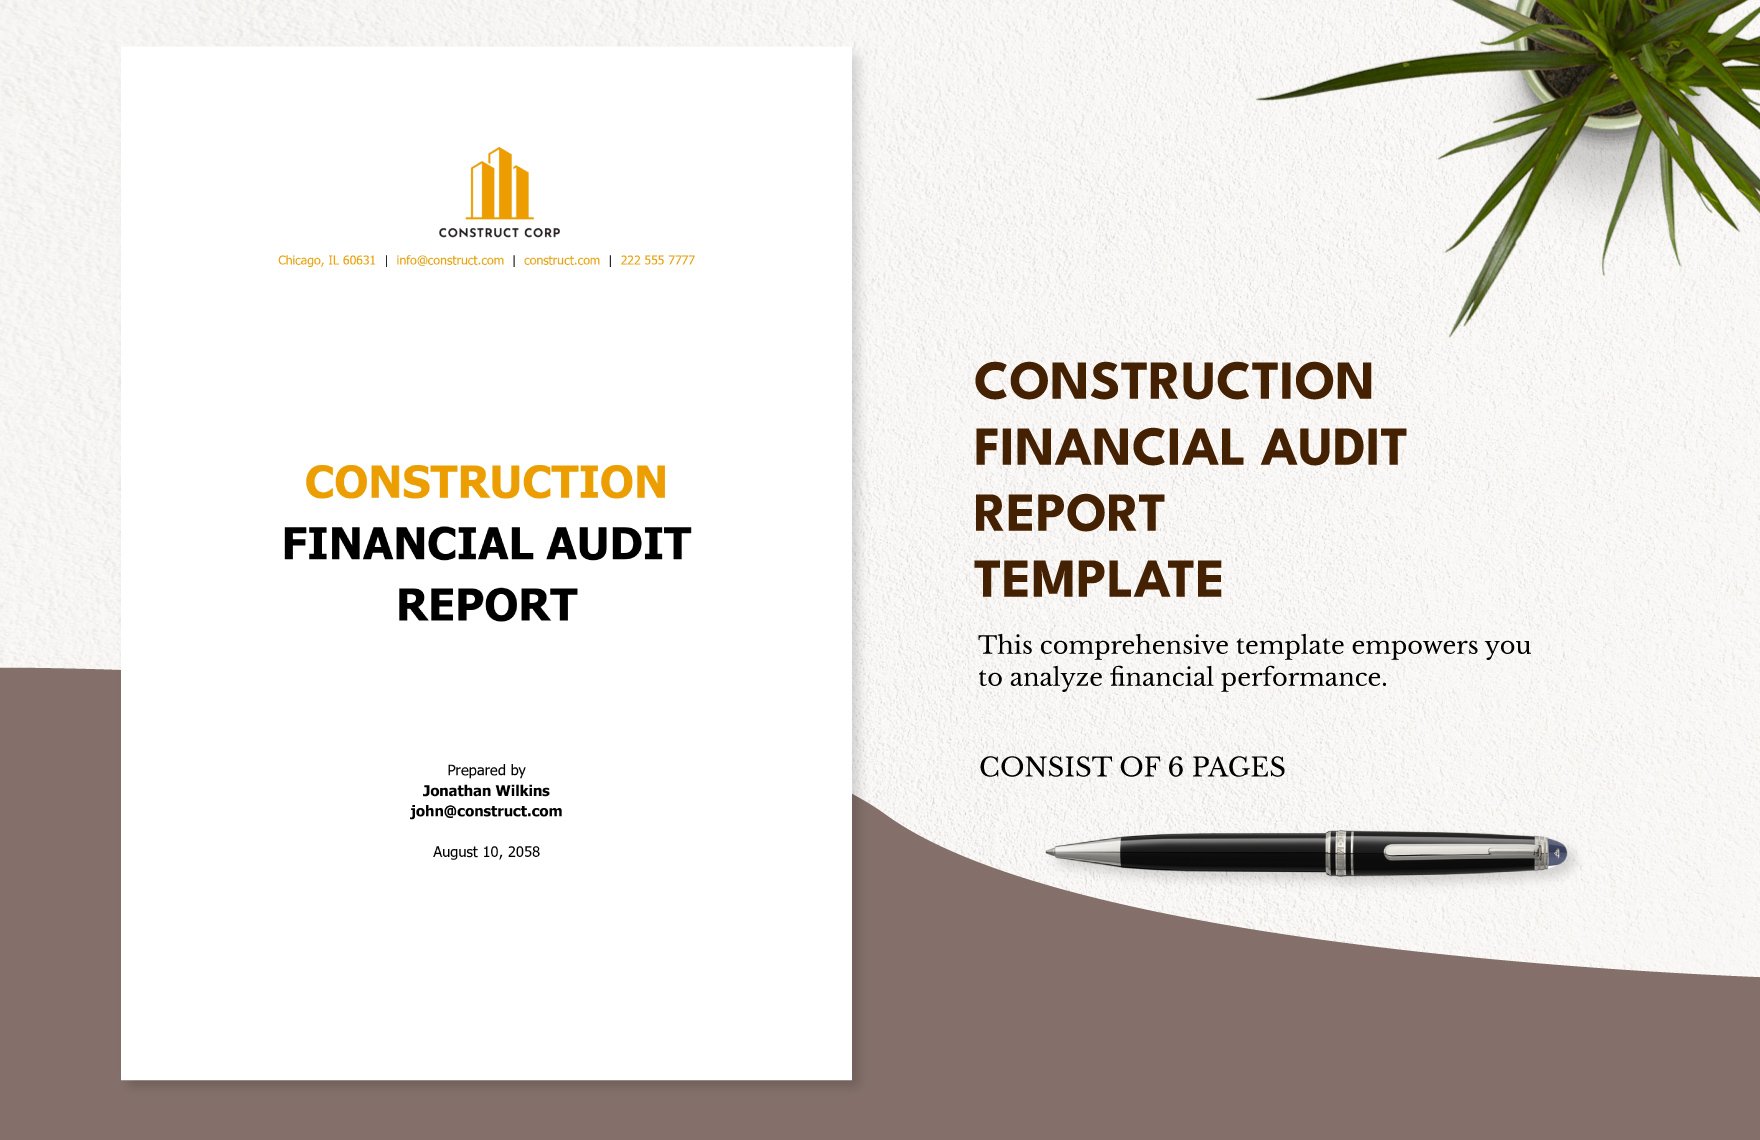 Construction Financial Audit Report Template